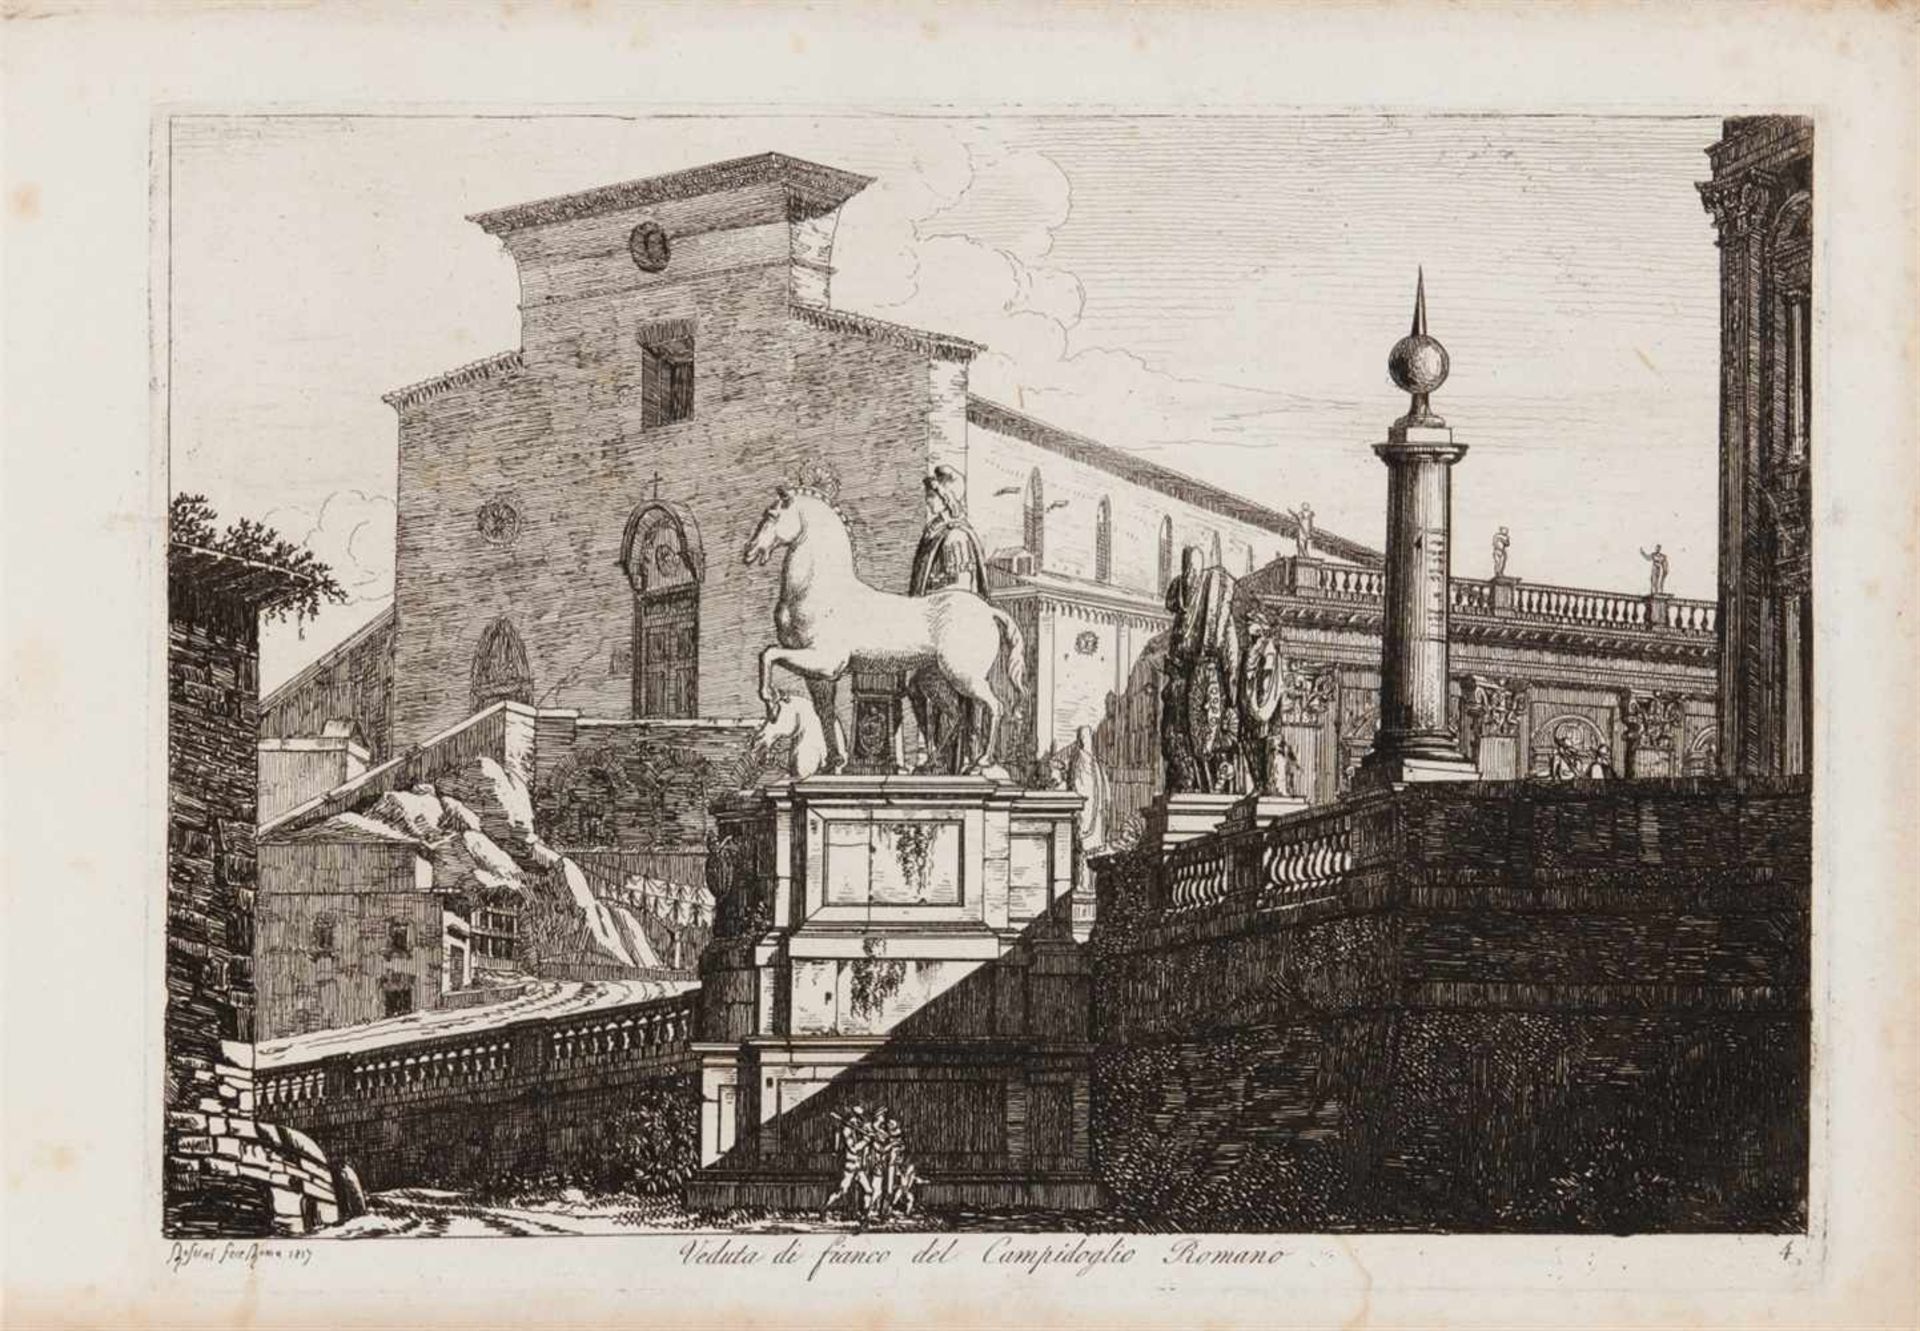 LUIGI ROSSINI Ravenna 1790 - 1857 Rom Raccolta di Cinquanta Principali Vedute di Antichità, tratte